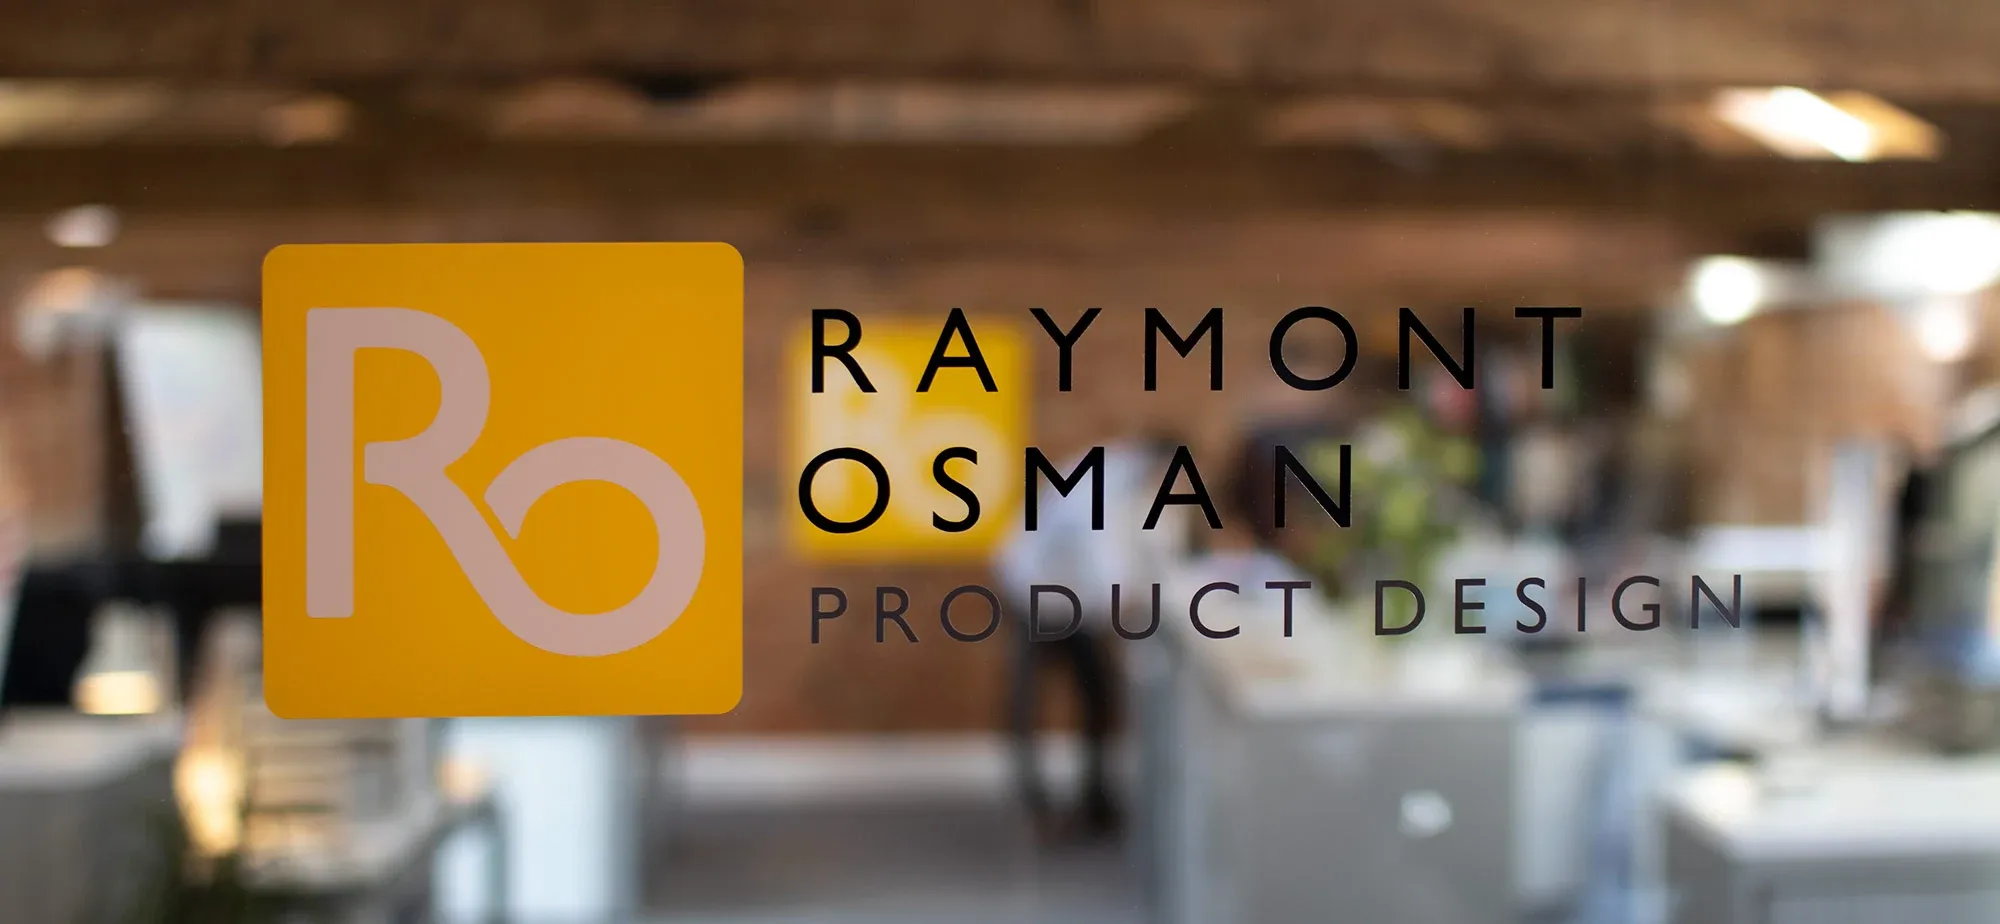 Welcome to Raymont-Osman